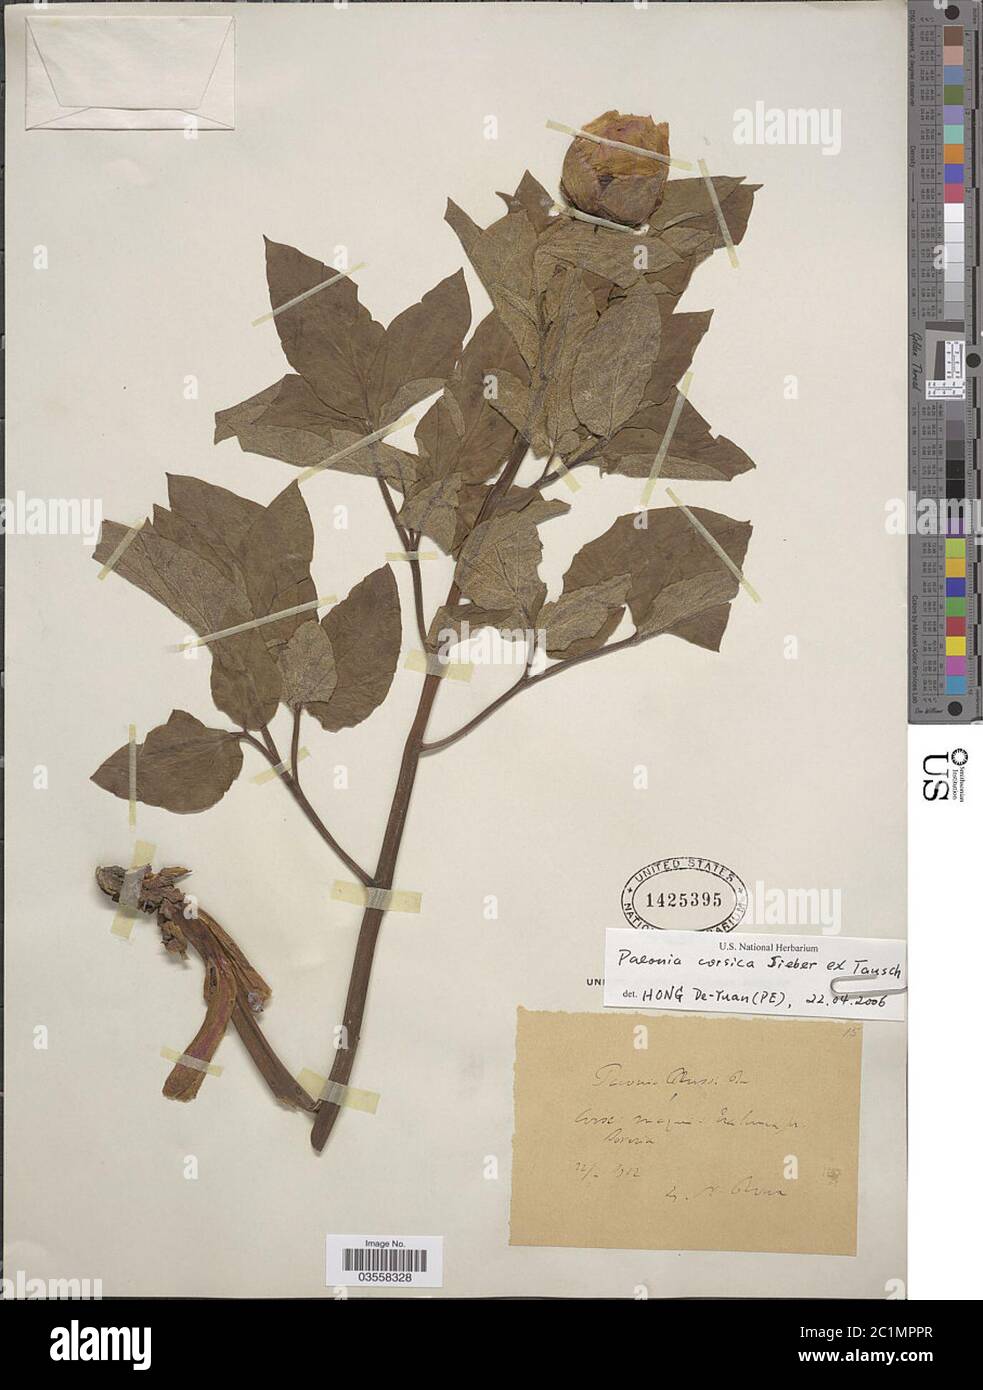 Paeonia corsica Sieber ex Tausch Paeonia corsica Sieber ex Tausch. Stock Photo